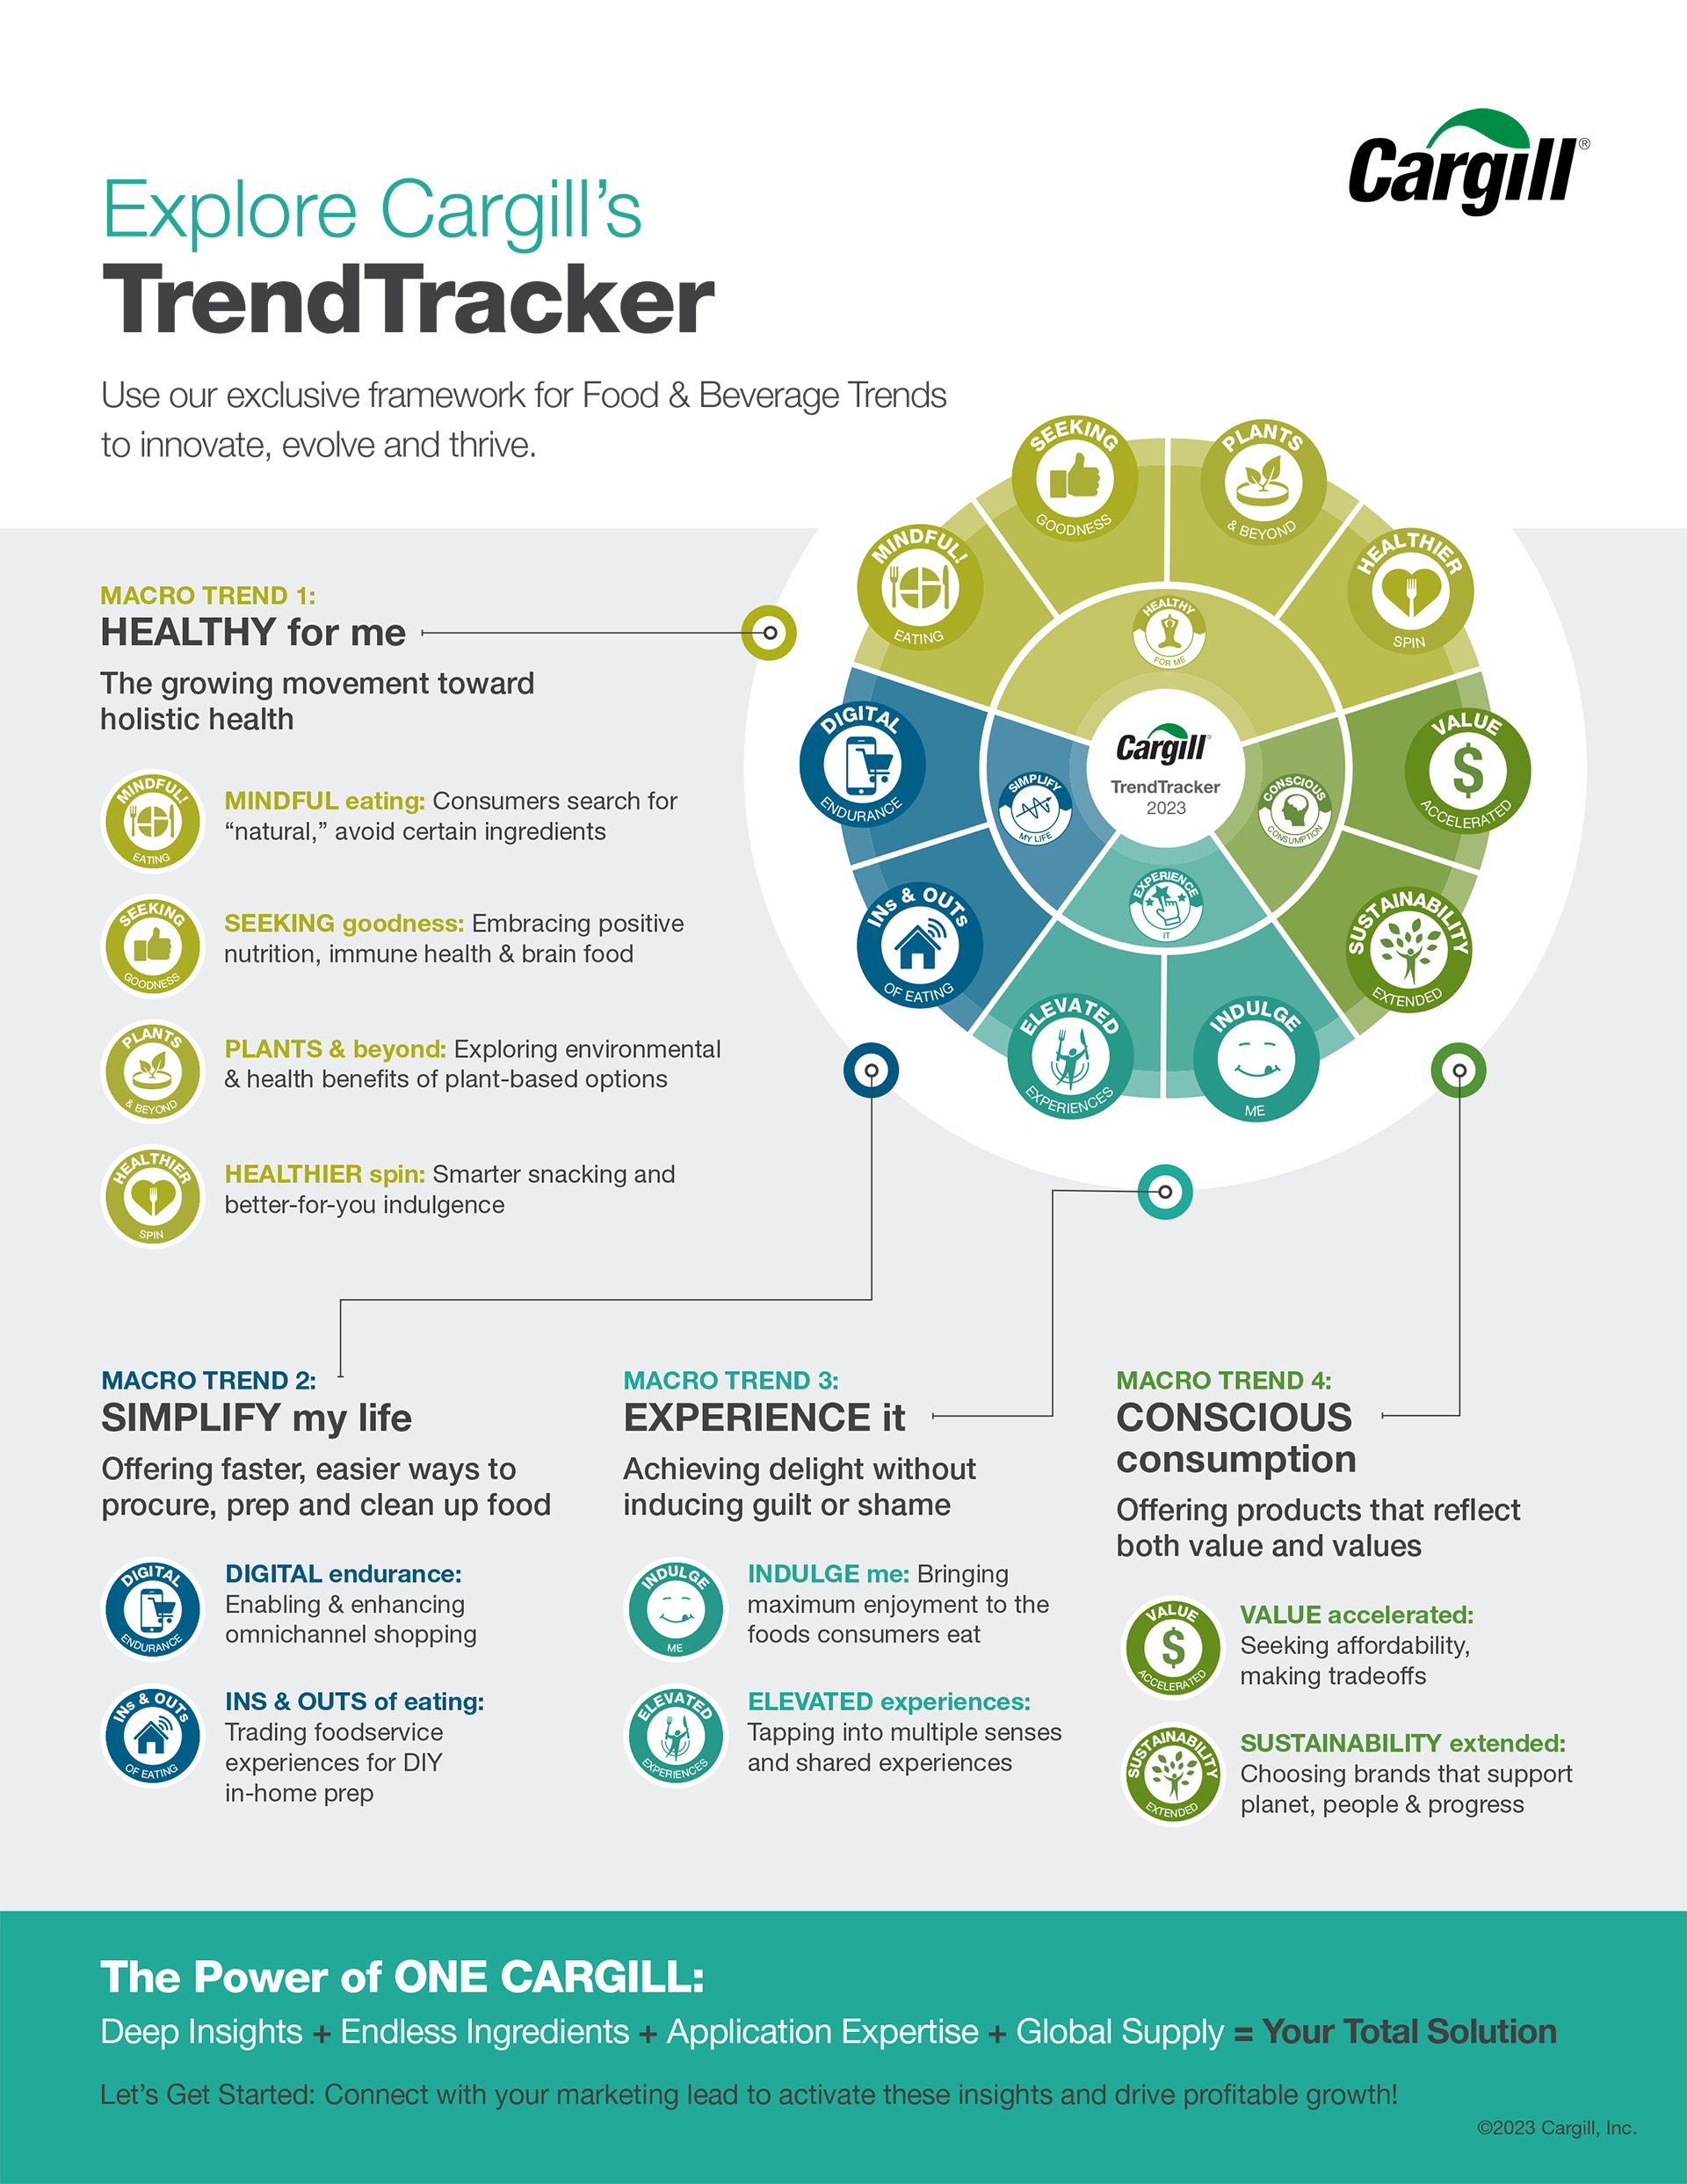 Explore Cargill's TrendTracker 2023 infographic